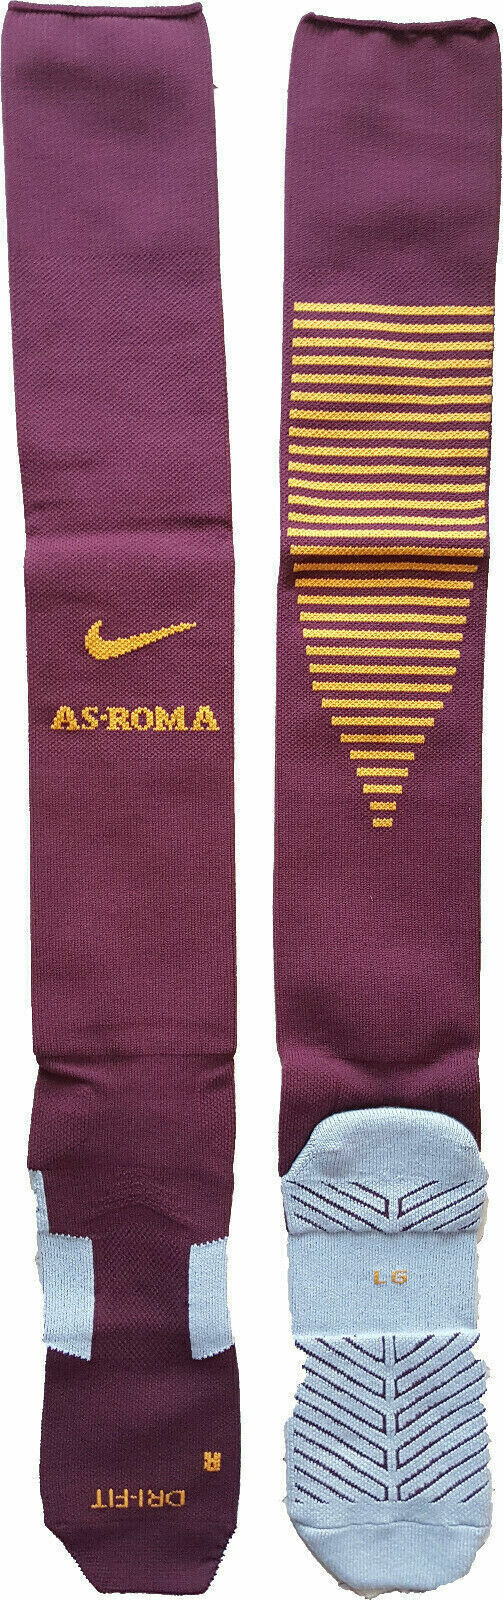 calza socks  AS Roma Nike 2016 2017 *STOCK PRO* authentic home calzettoni